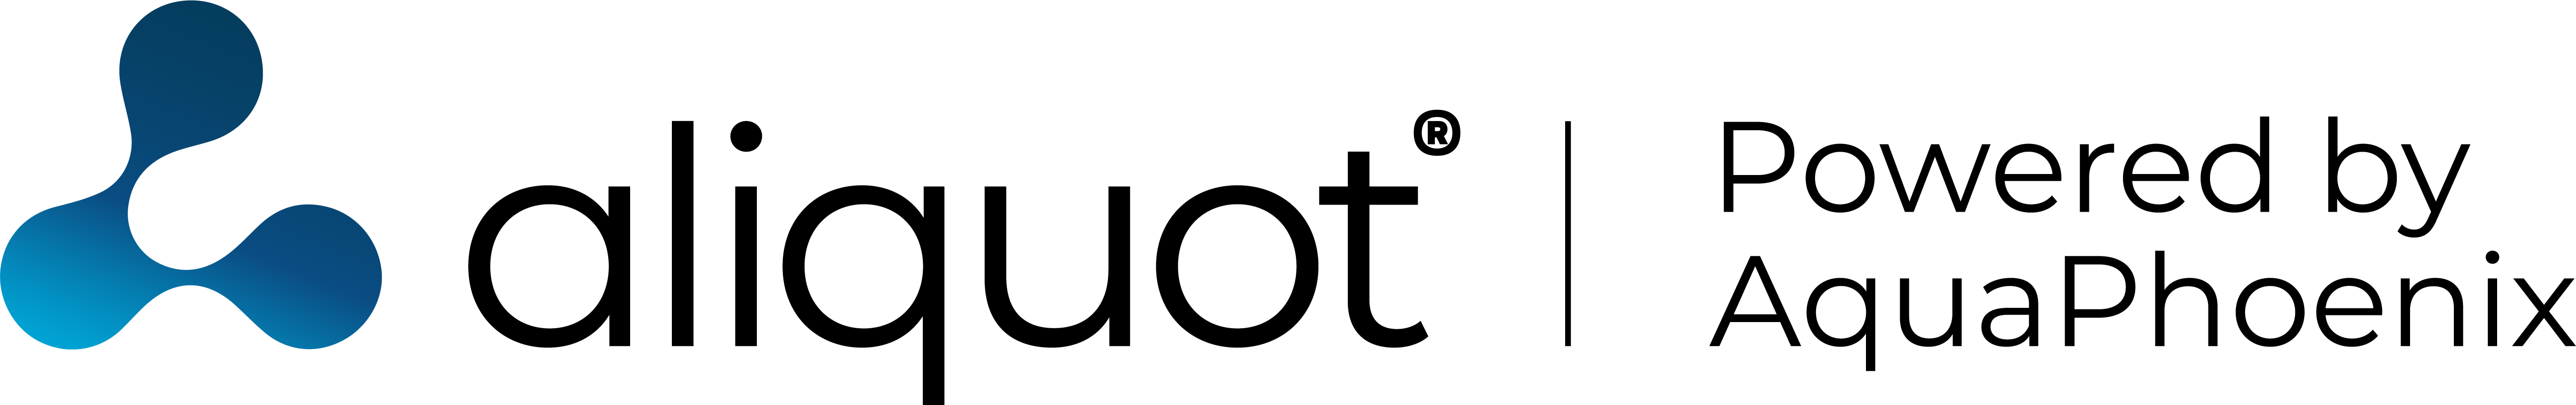 Aliquot Logo wByline RGB-1